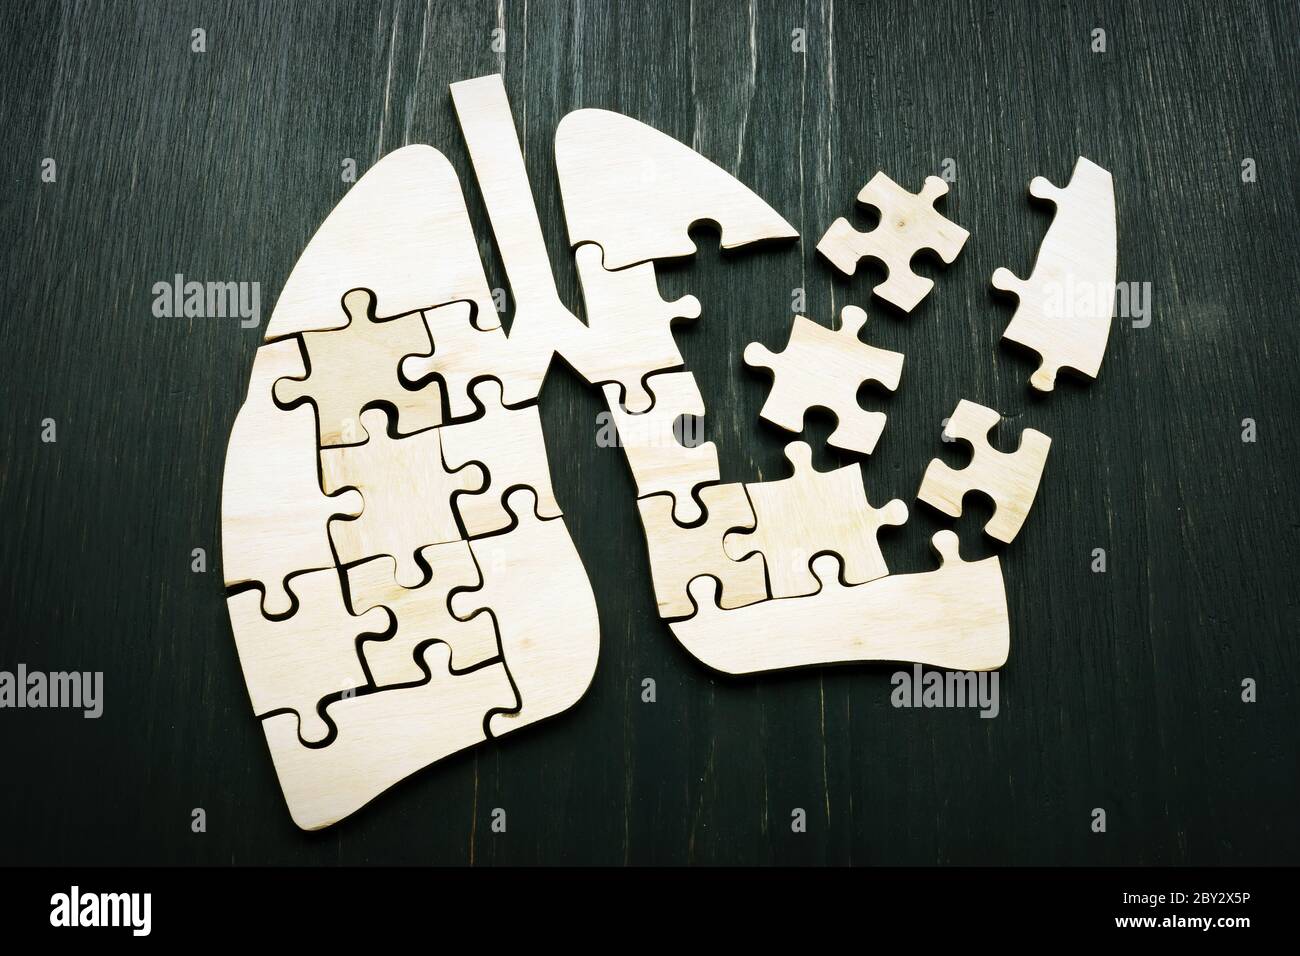 Pulmón humano de puzzles como símbolo de cáncer de pulmón o enfermedad respiratoria. Foto de stock